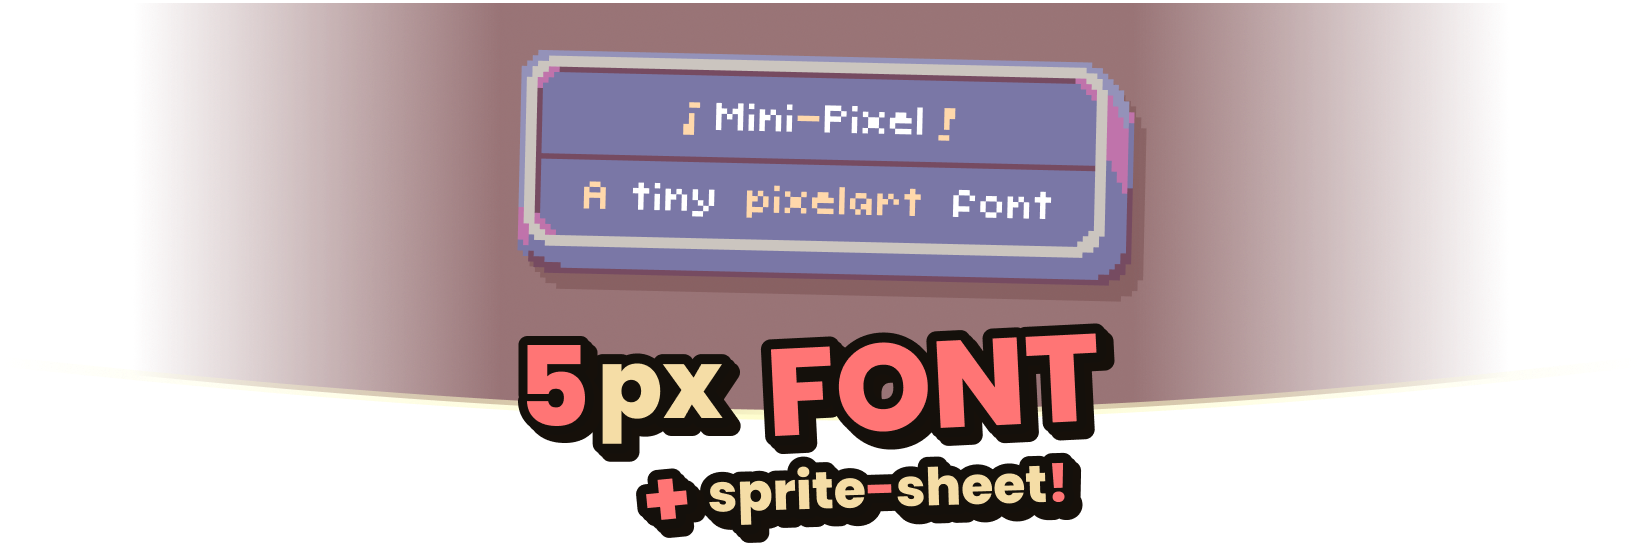 "Mini-Pixel" - PixelArt Font